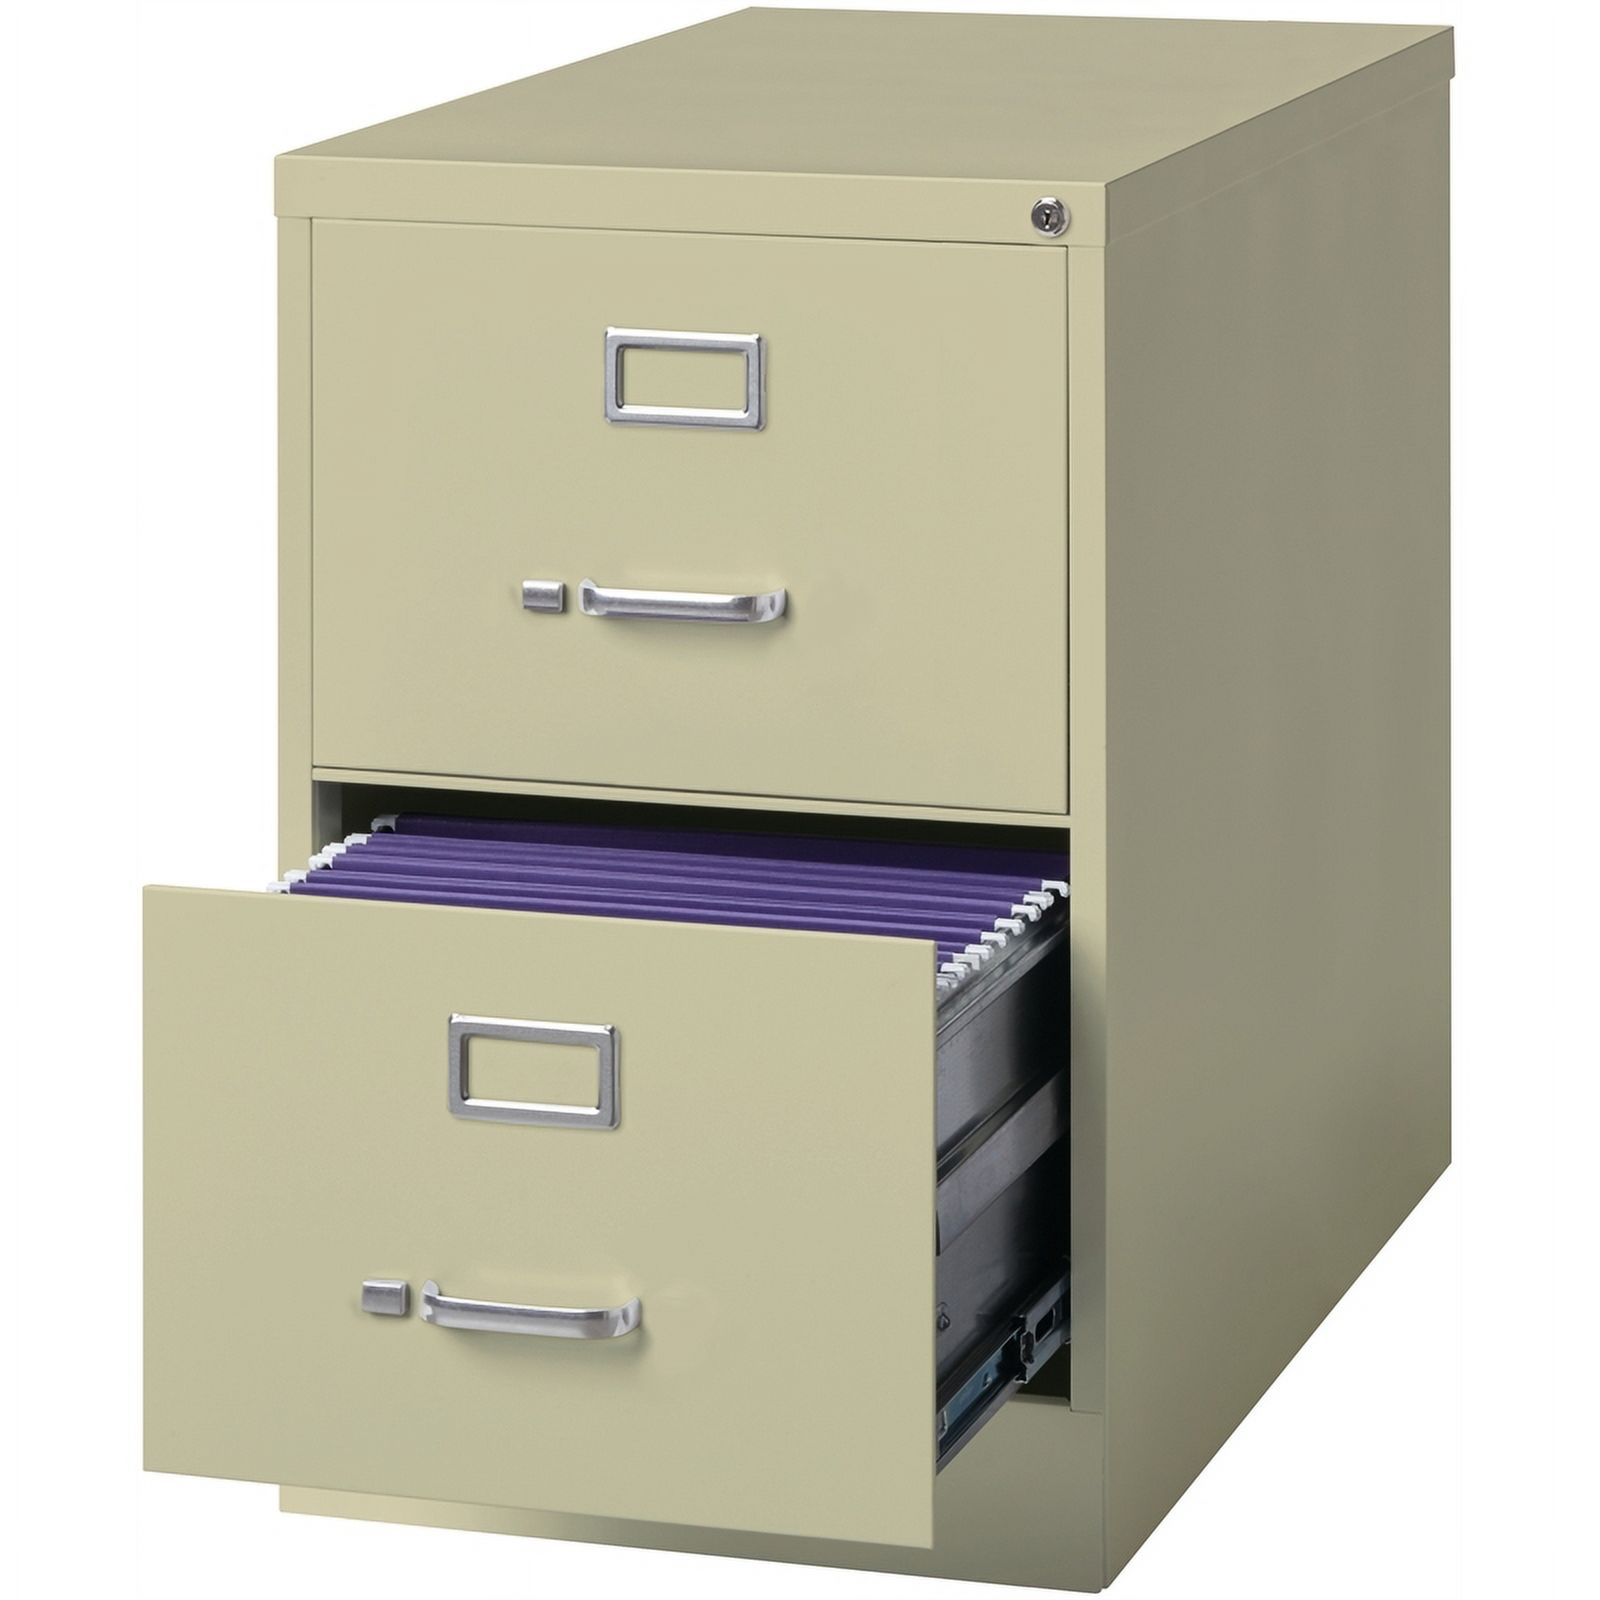 Scranton & Co 26.5" 2-Drawer Metal Legal Width Vertical File Cabinet in Beige - image 5 of 5